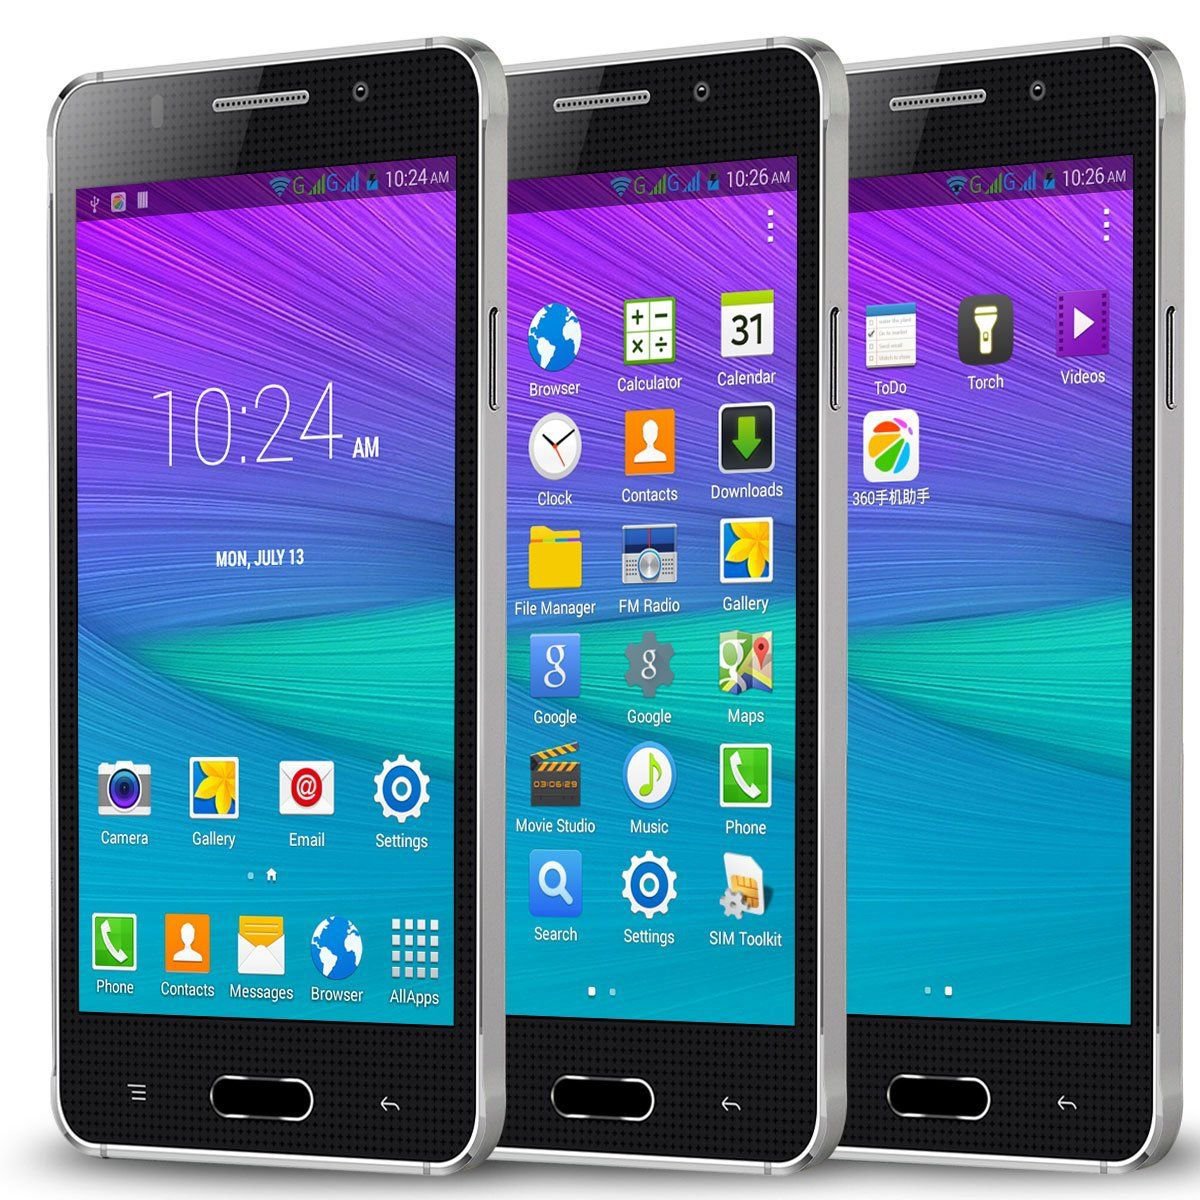 XGODY 5" Android 4.4 Smartphone Dual SIM Unlocked 3G/GSM GPS Best